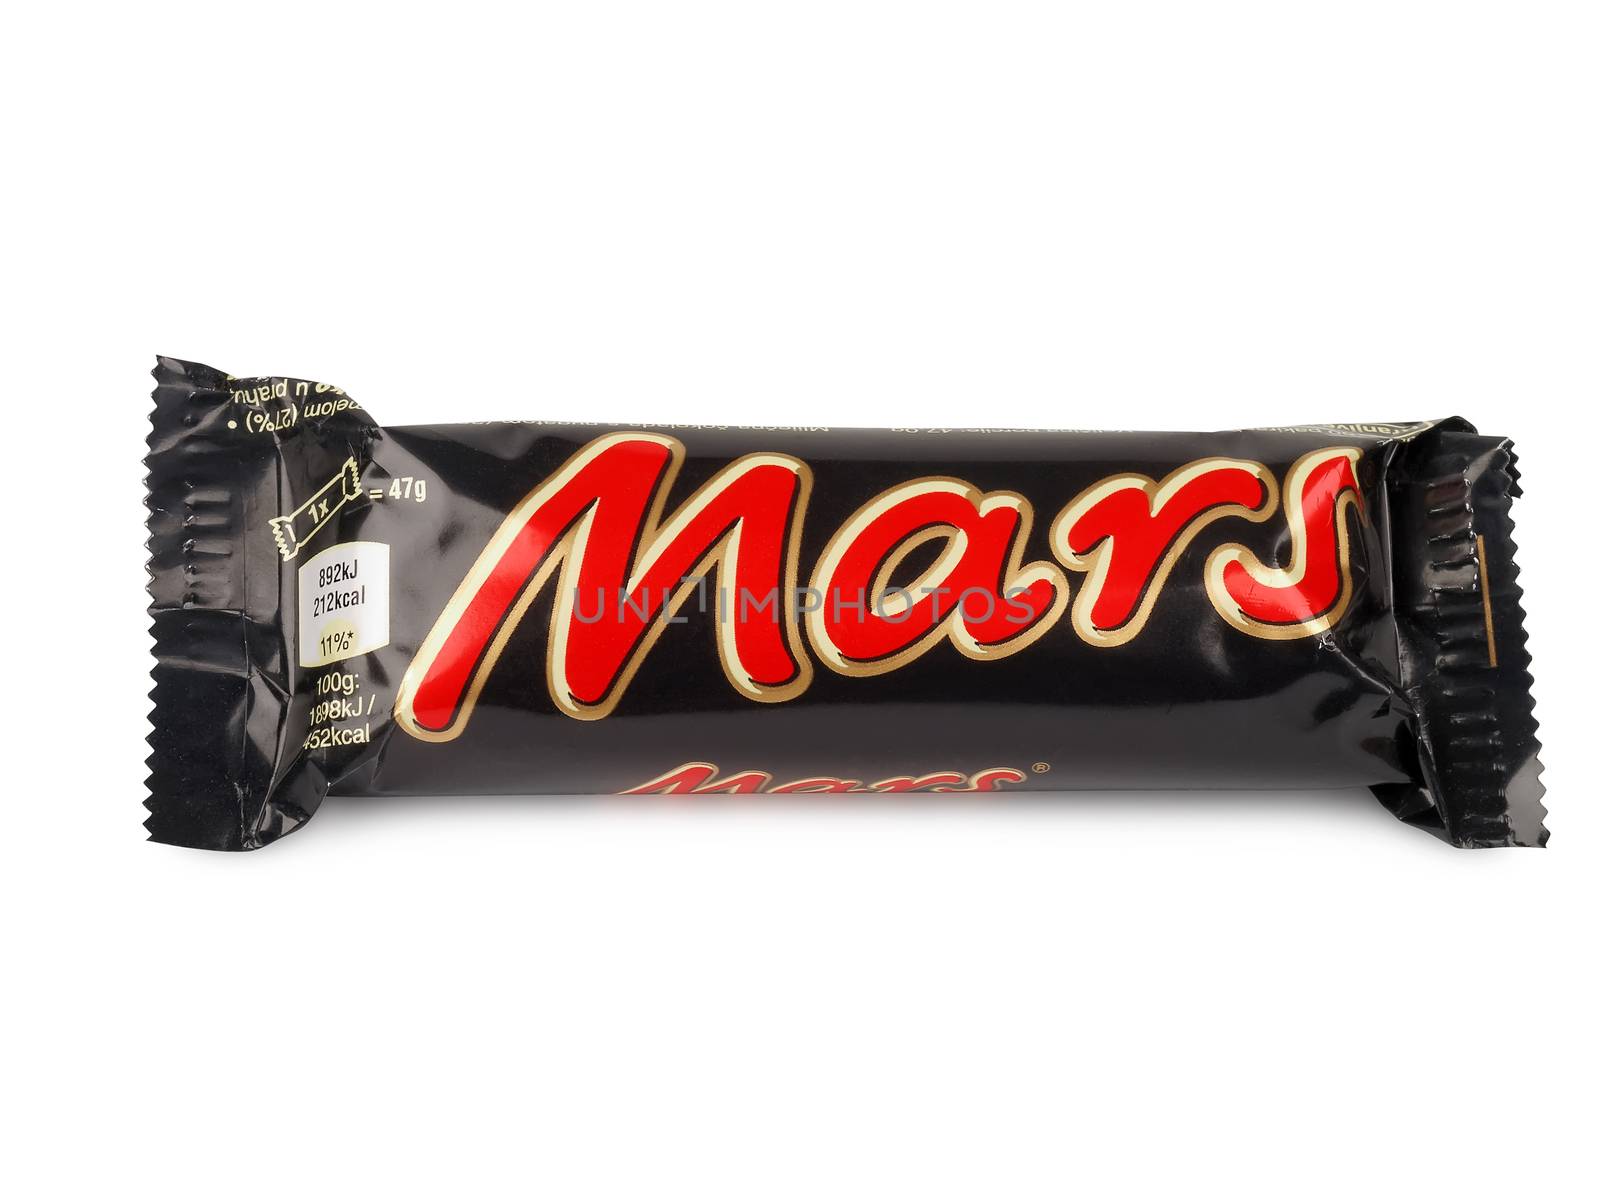 Mars chocolate bar by sewer12